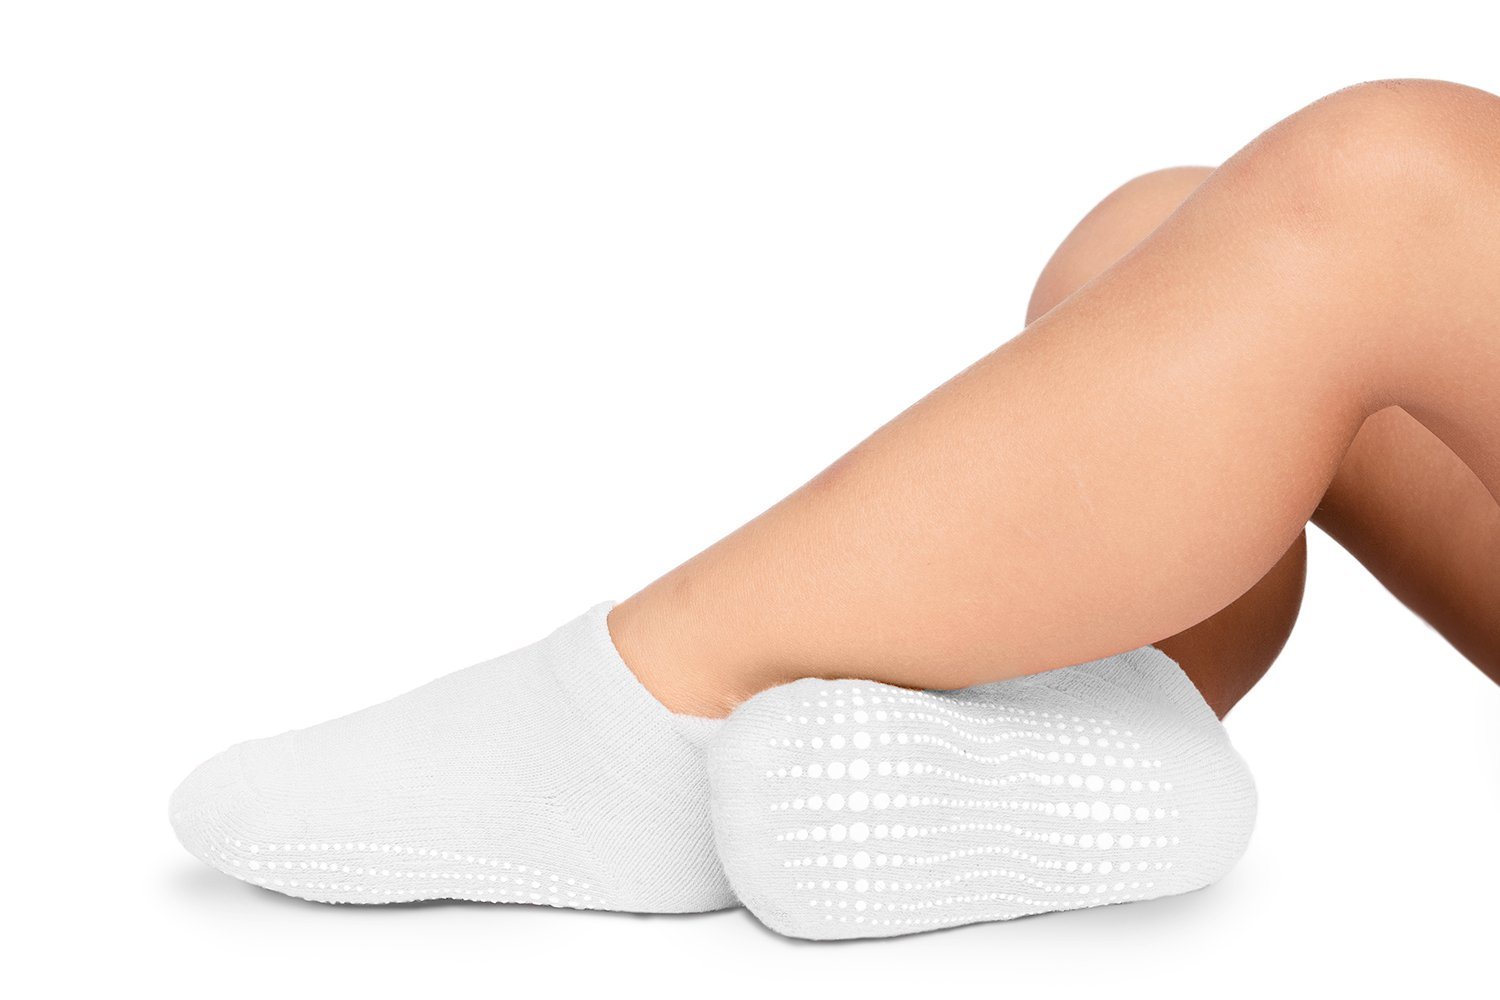 slip resistant socks for toddlers